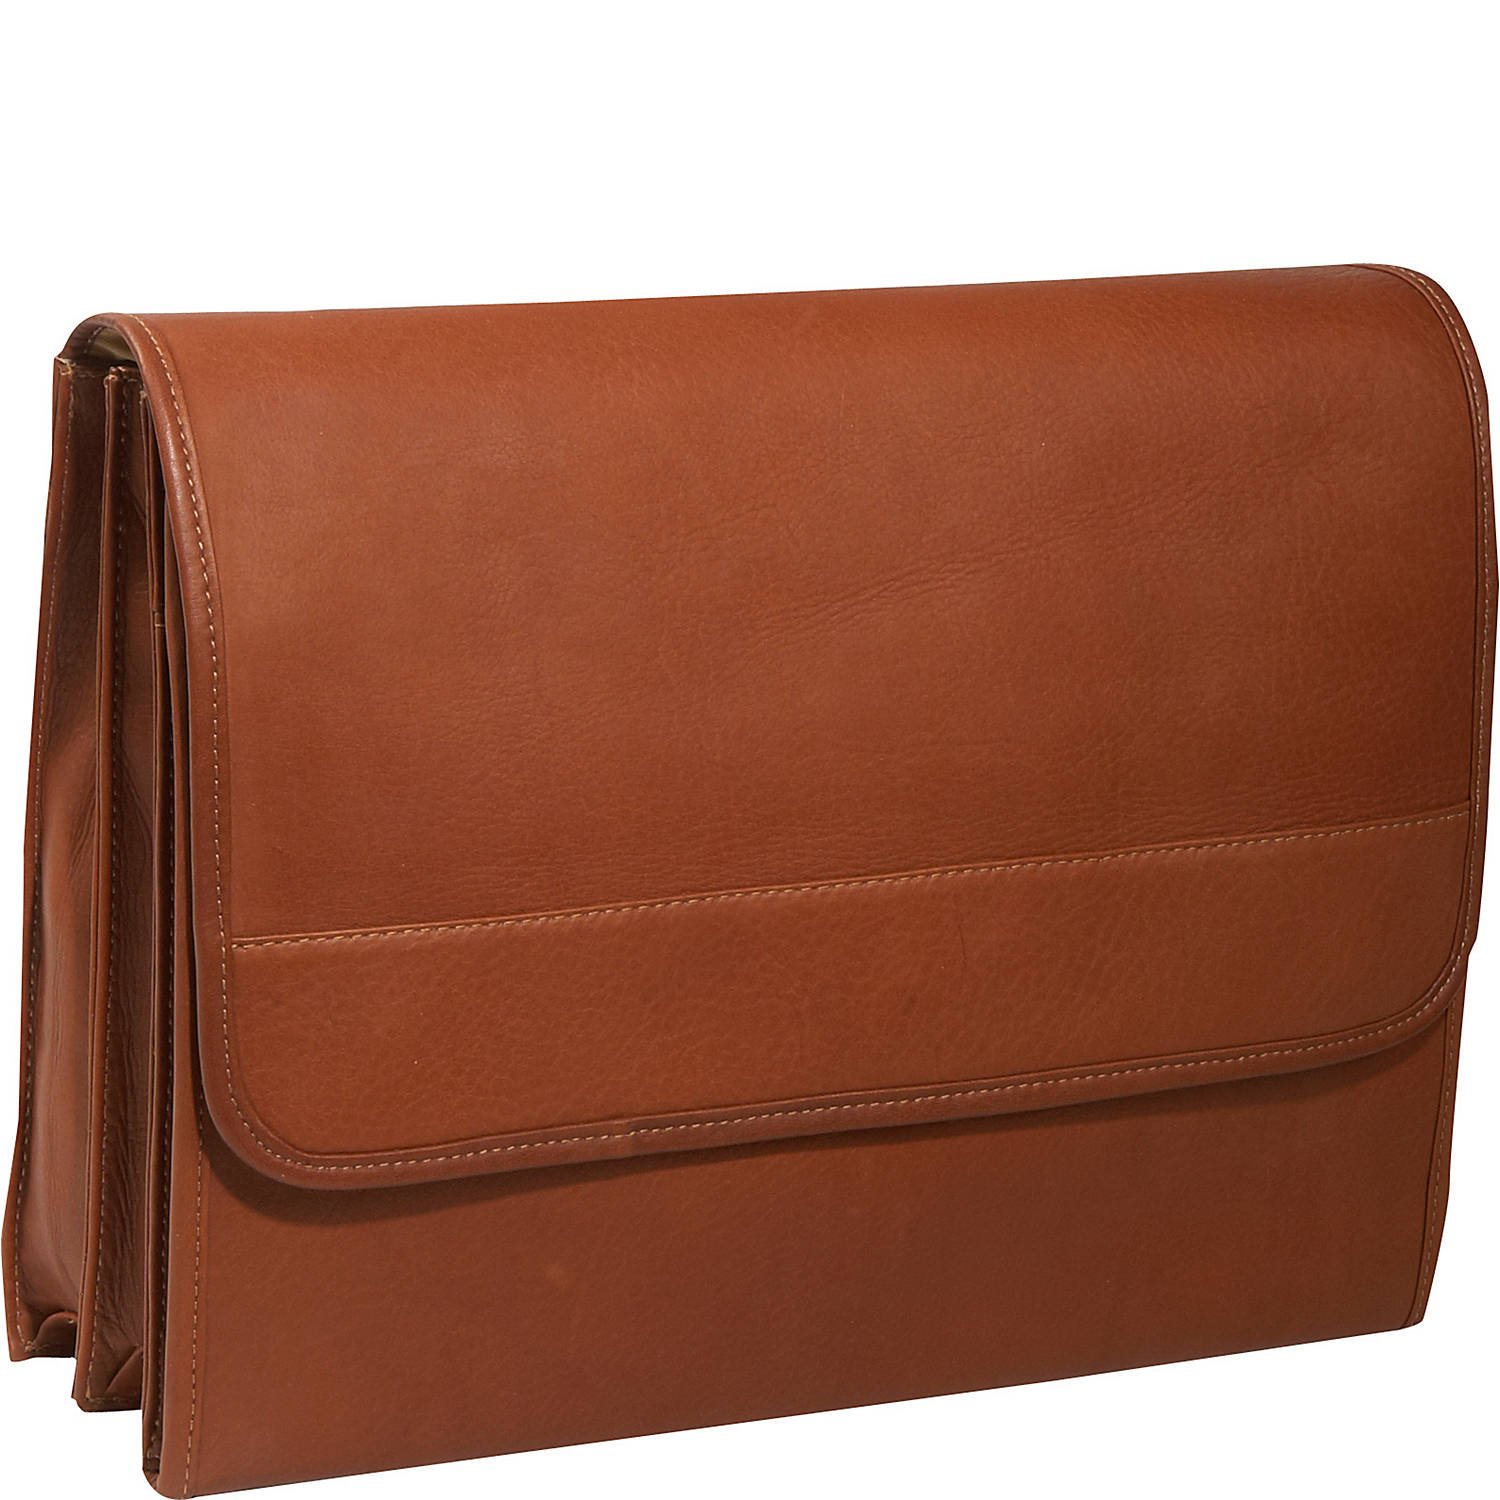 Piel Leather Envelope Portfolio, Saddle, One Size